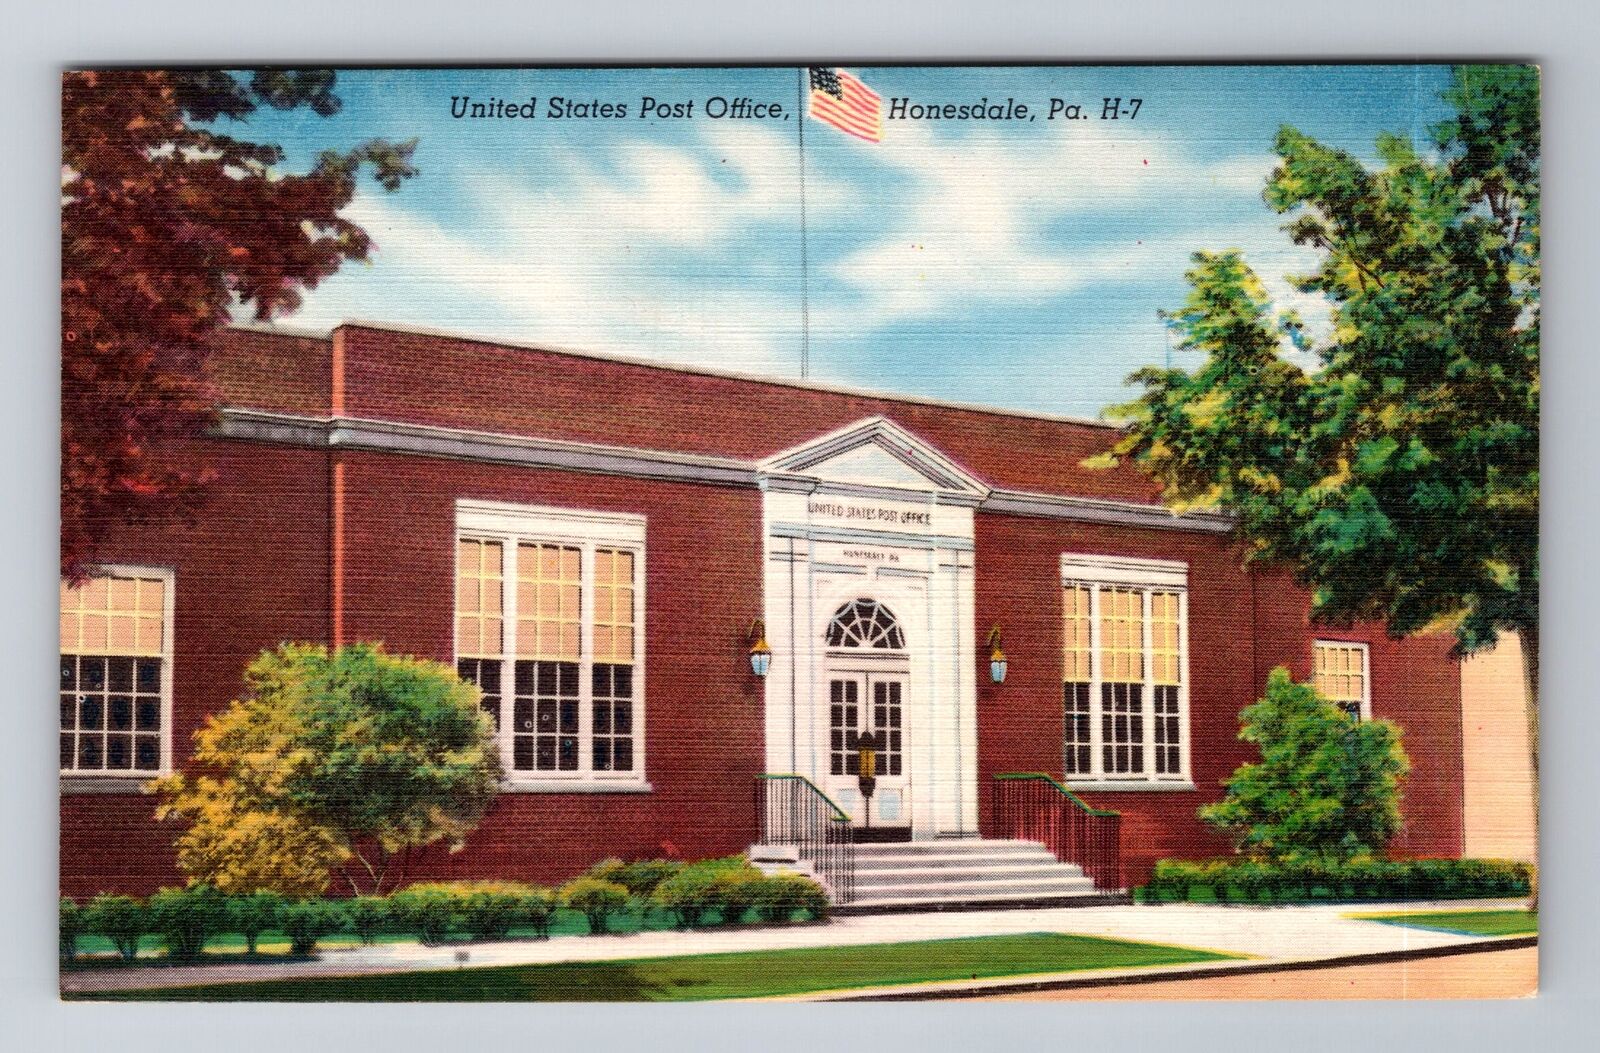 Honesdale PA-Pennsylvania, United States Post Office, Antique, Vintage Postcard